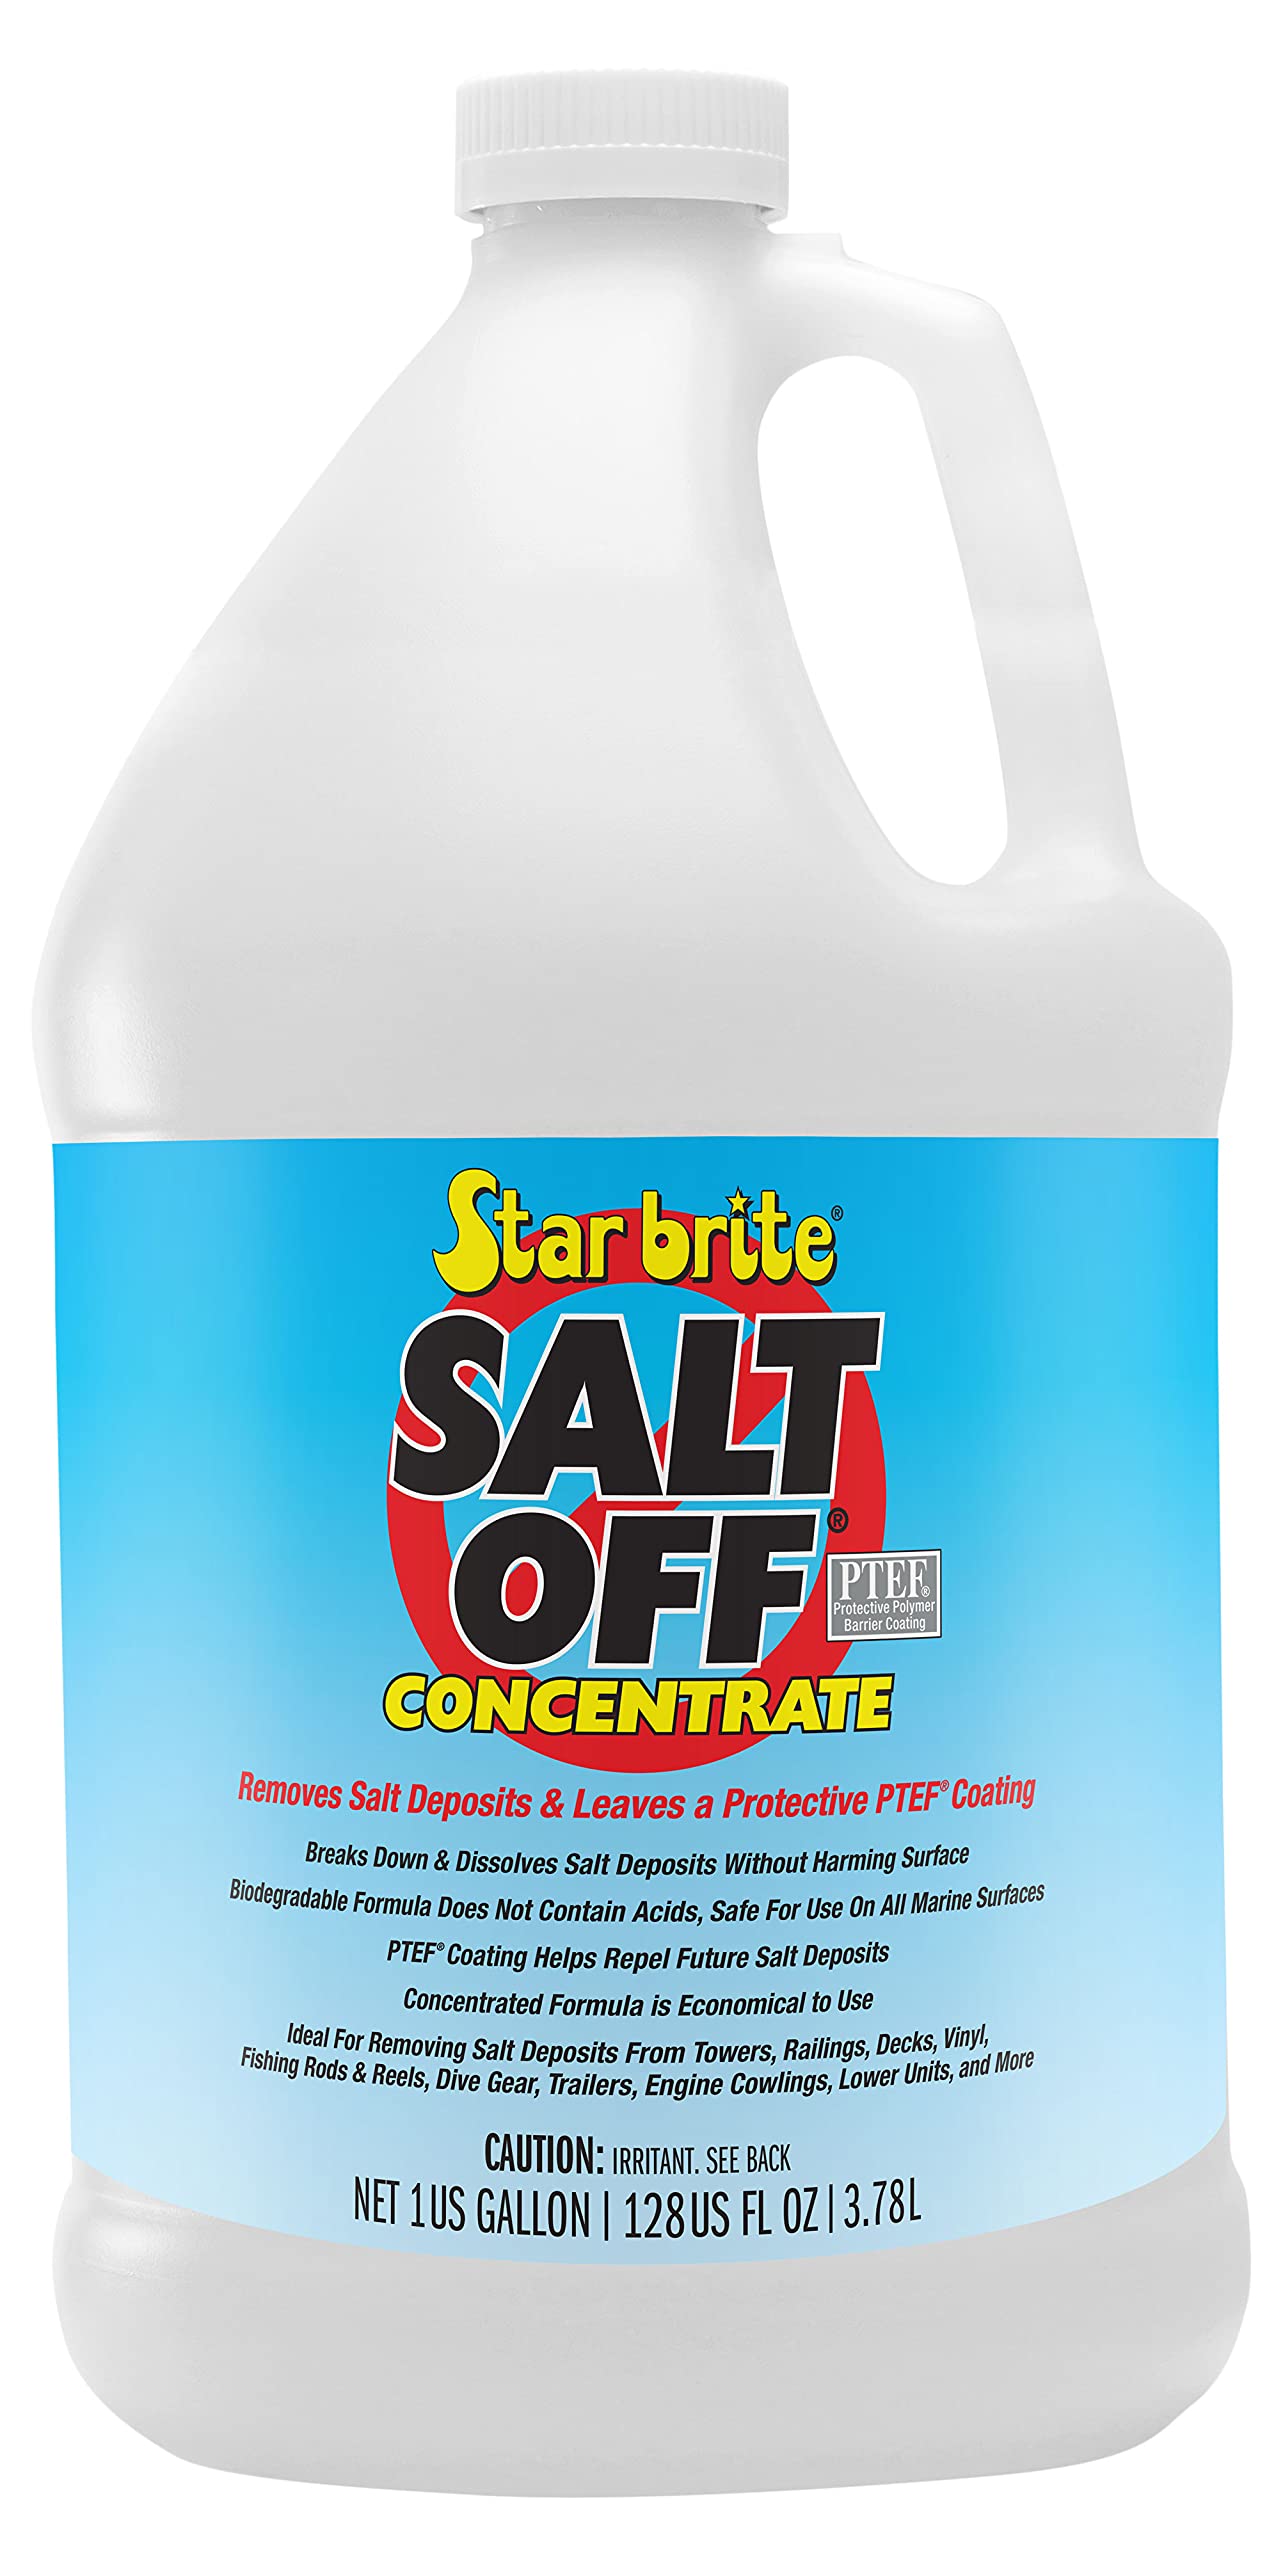 Salt-Away Concentrate Gallon